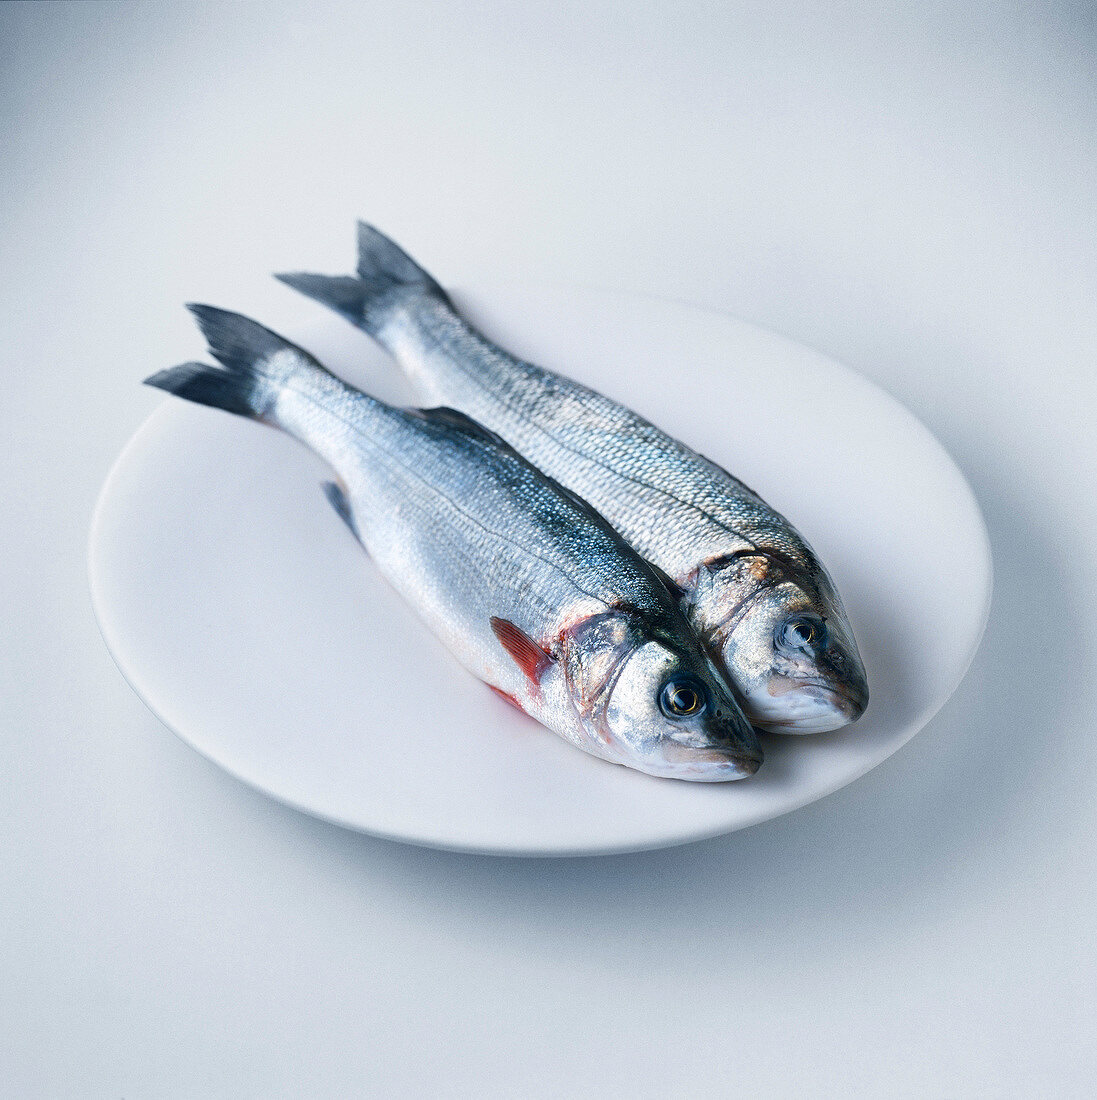 Pair of Branzino sea bass on plate